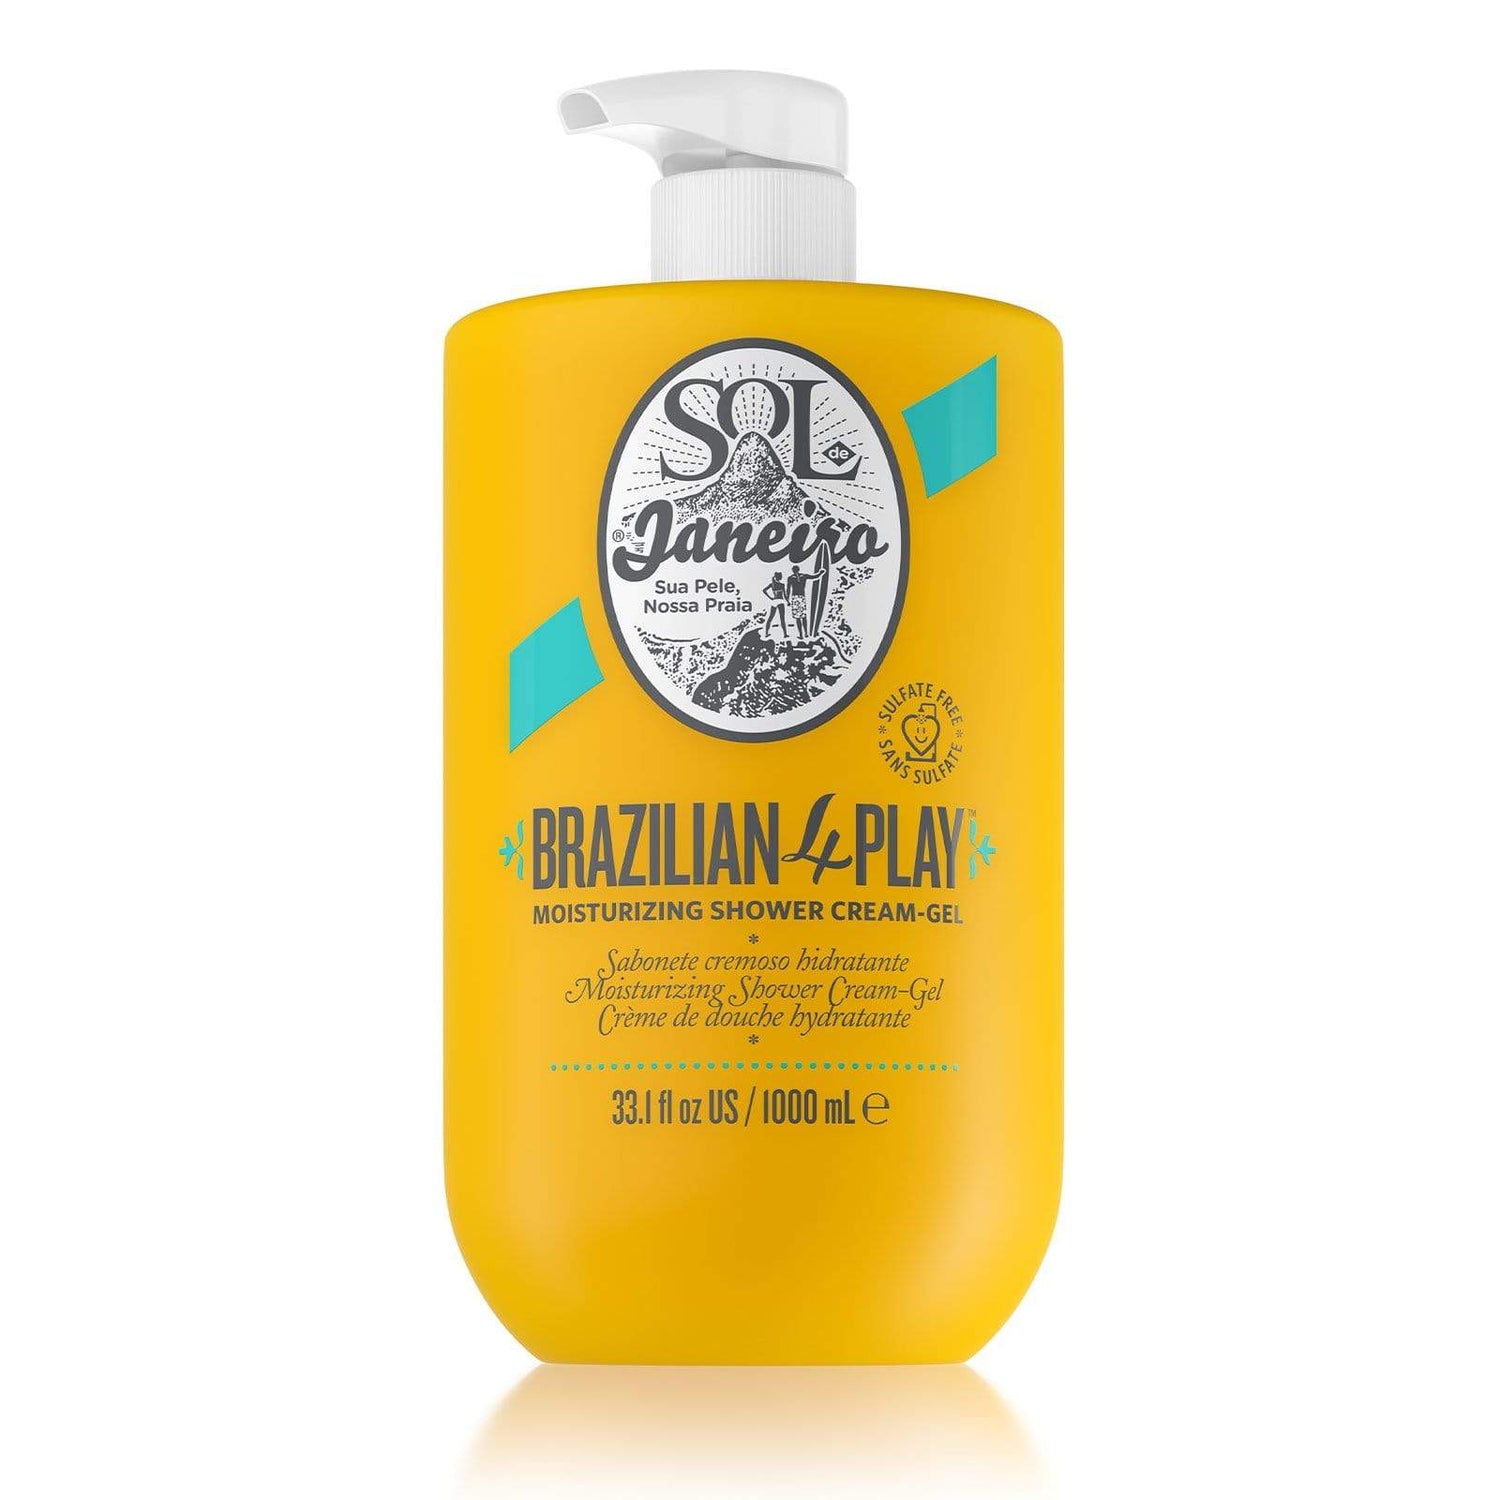  SOL DE JANEIRO 4 Play Moisturizing Shower Cream Gel